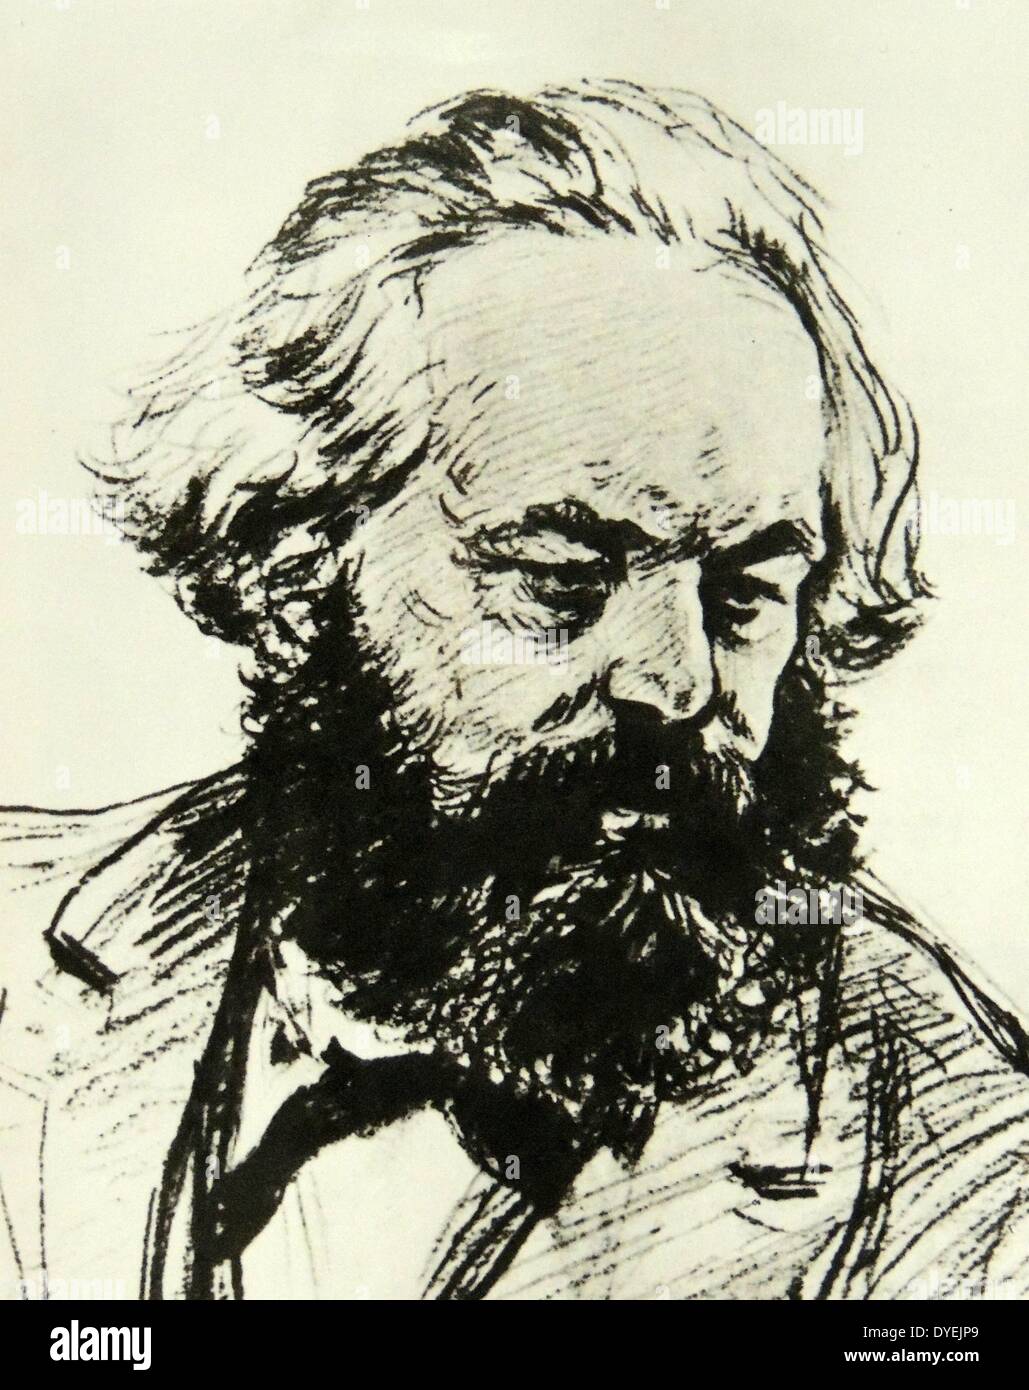 Karl Marx (5 May 1818 – 14 March 1883) was a German philosopher, economist, sociologist, historian, journalist, and revolutionary socialist. Stock Photo